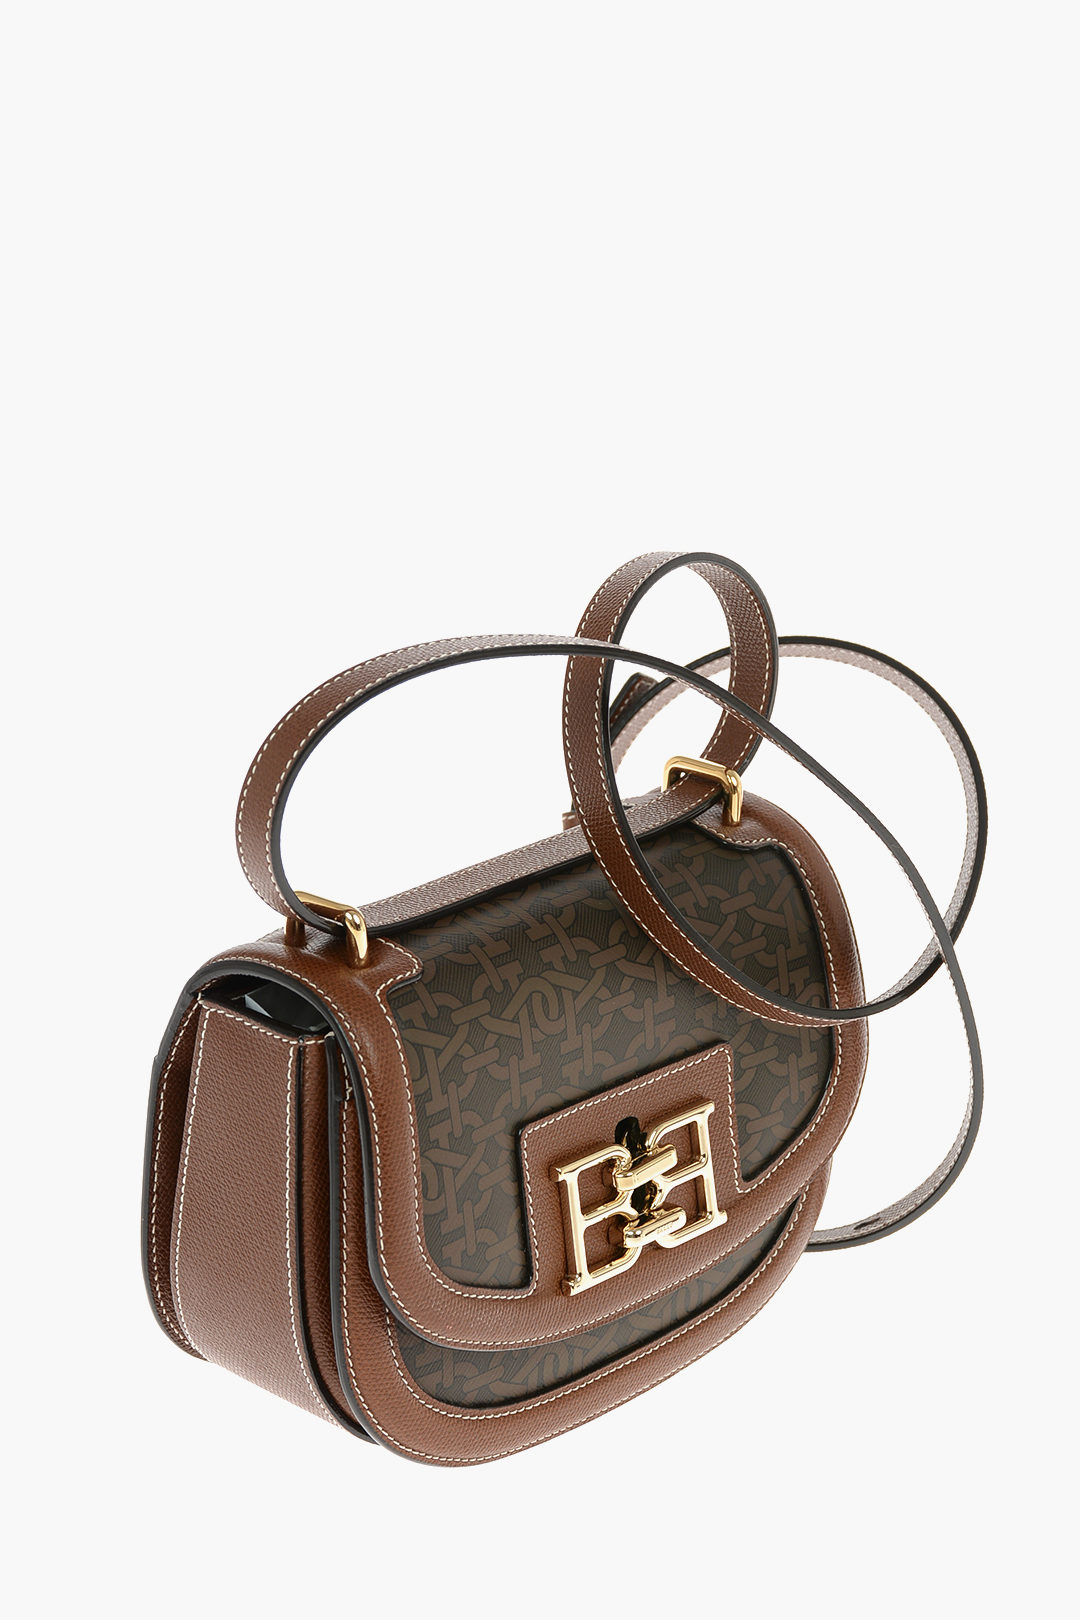 Bally - Brantlee leather crossbody bag